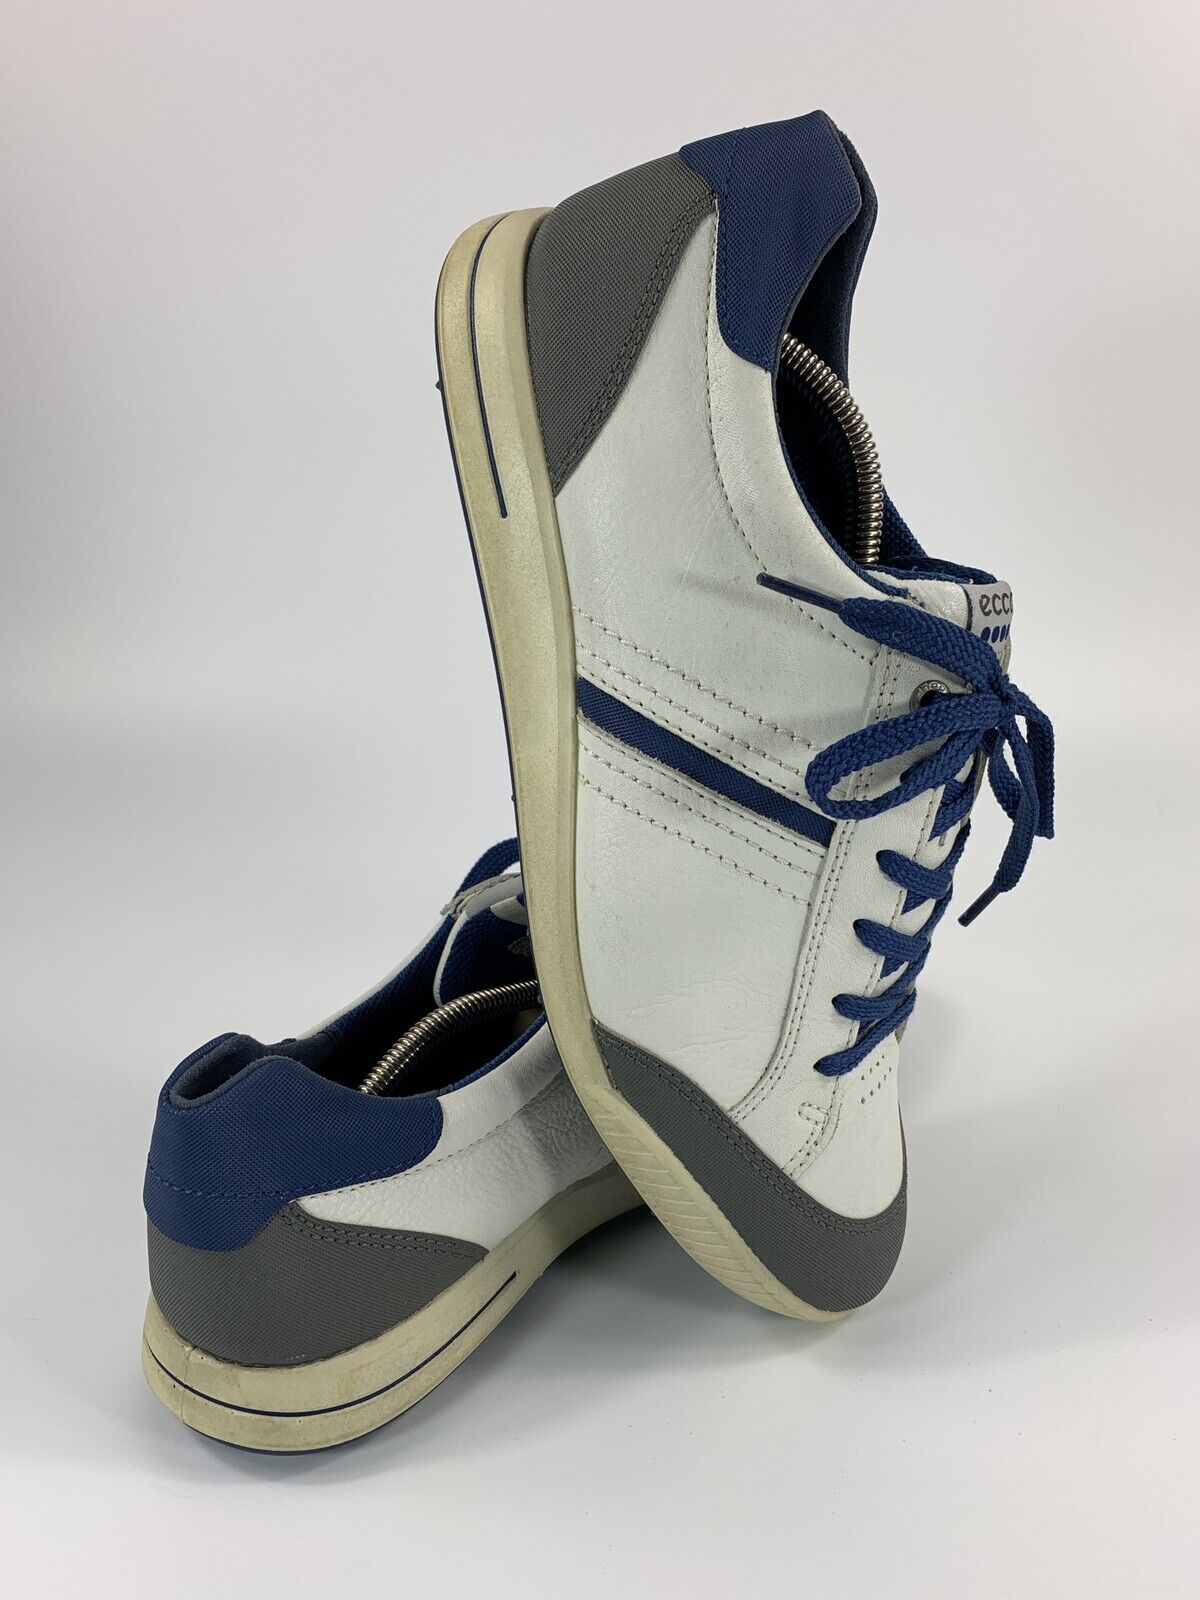 Ecco Hydromax Men\'s Size US 11-11.5/EU 45 TPU Shoes White Leather Blue Gray